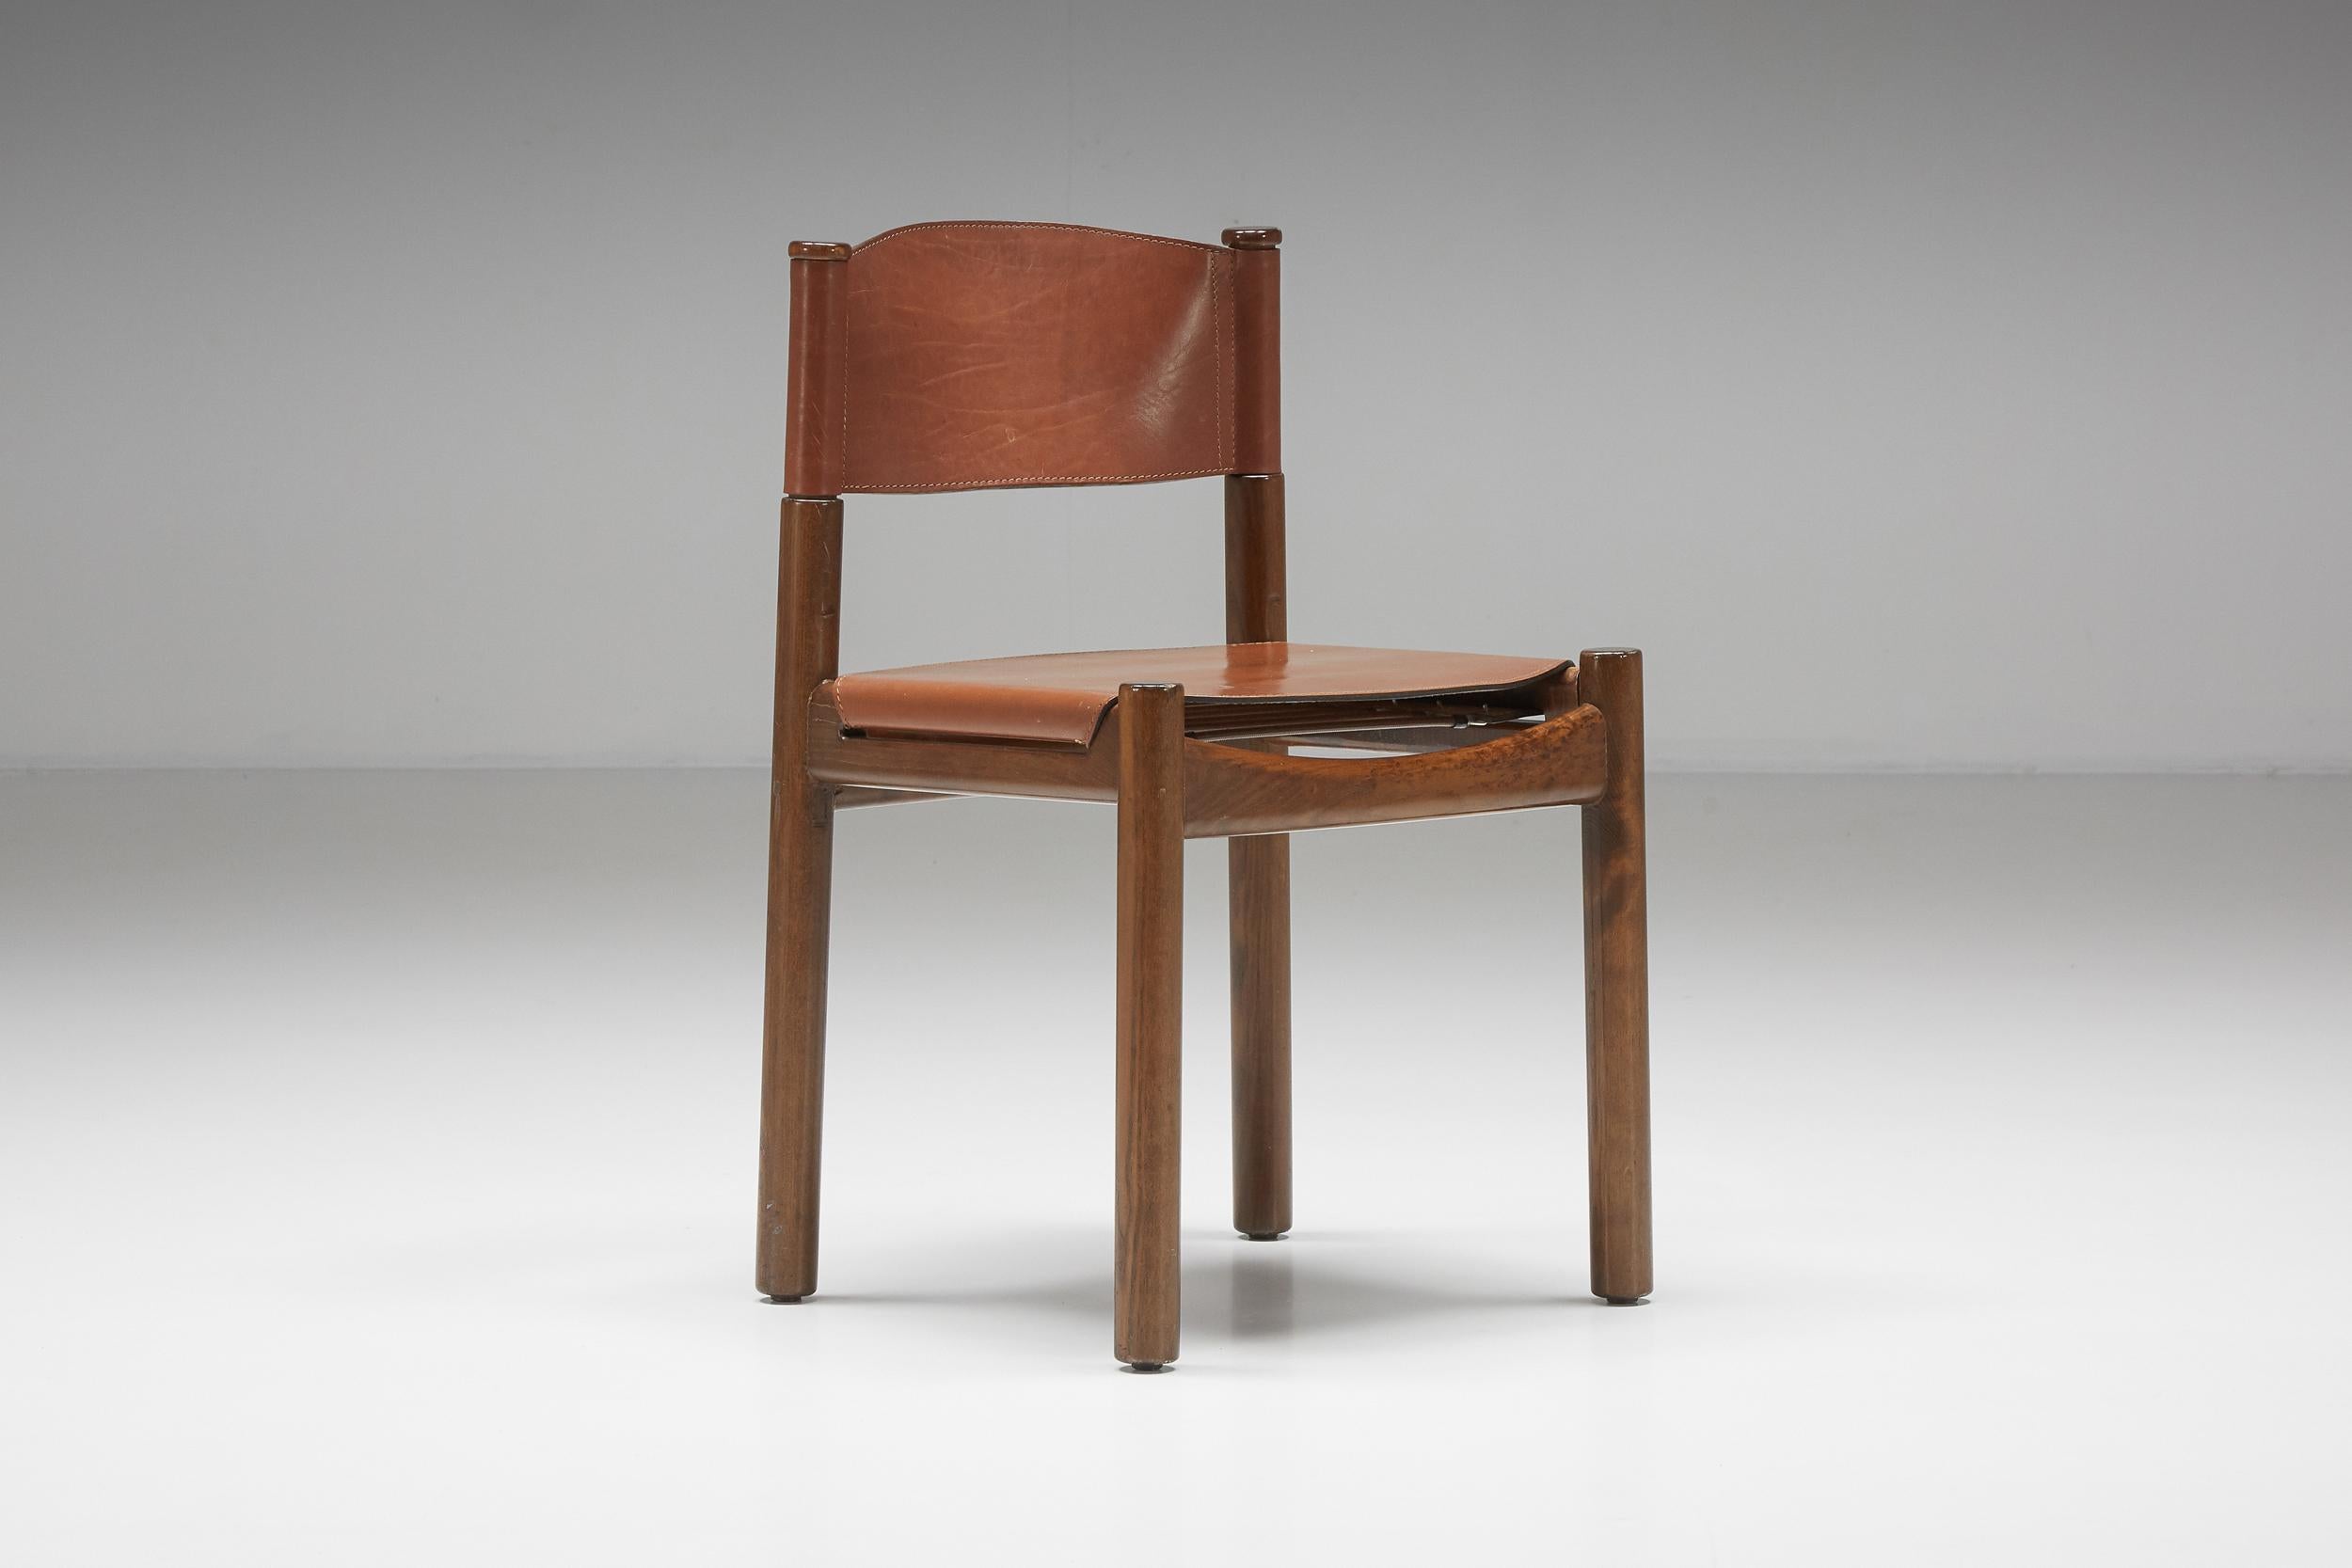 Scarpa Style Walnut & Leather Dining Chairs, Italian design, rustic twist 4